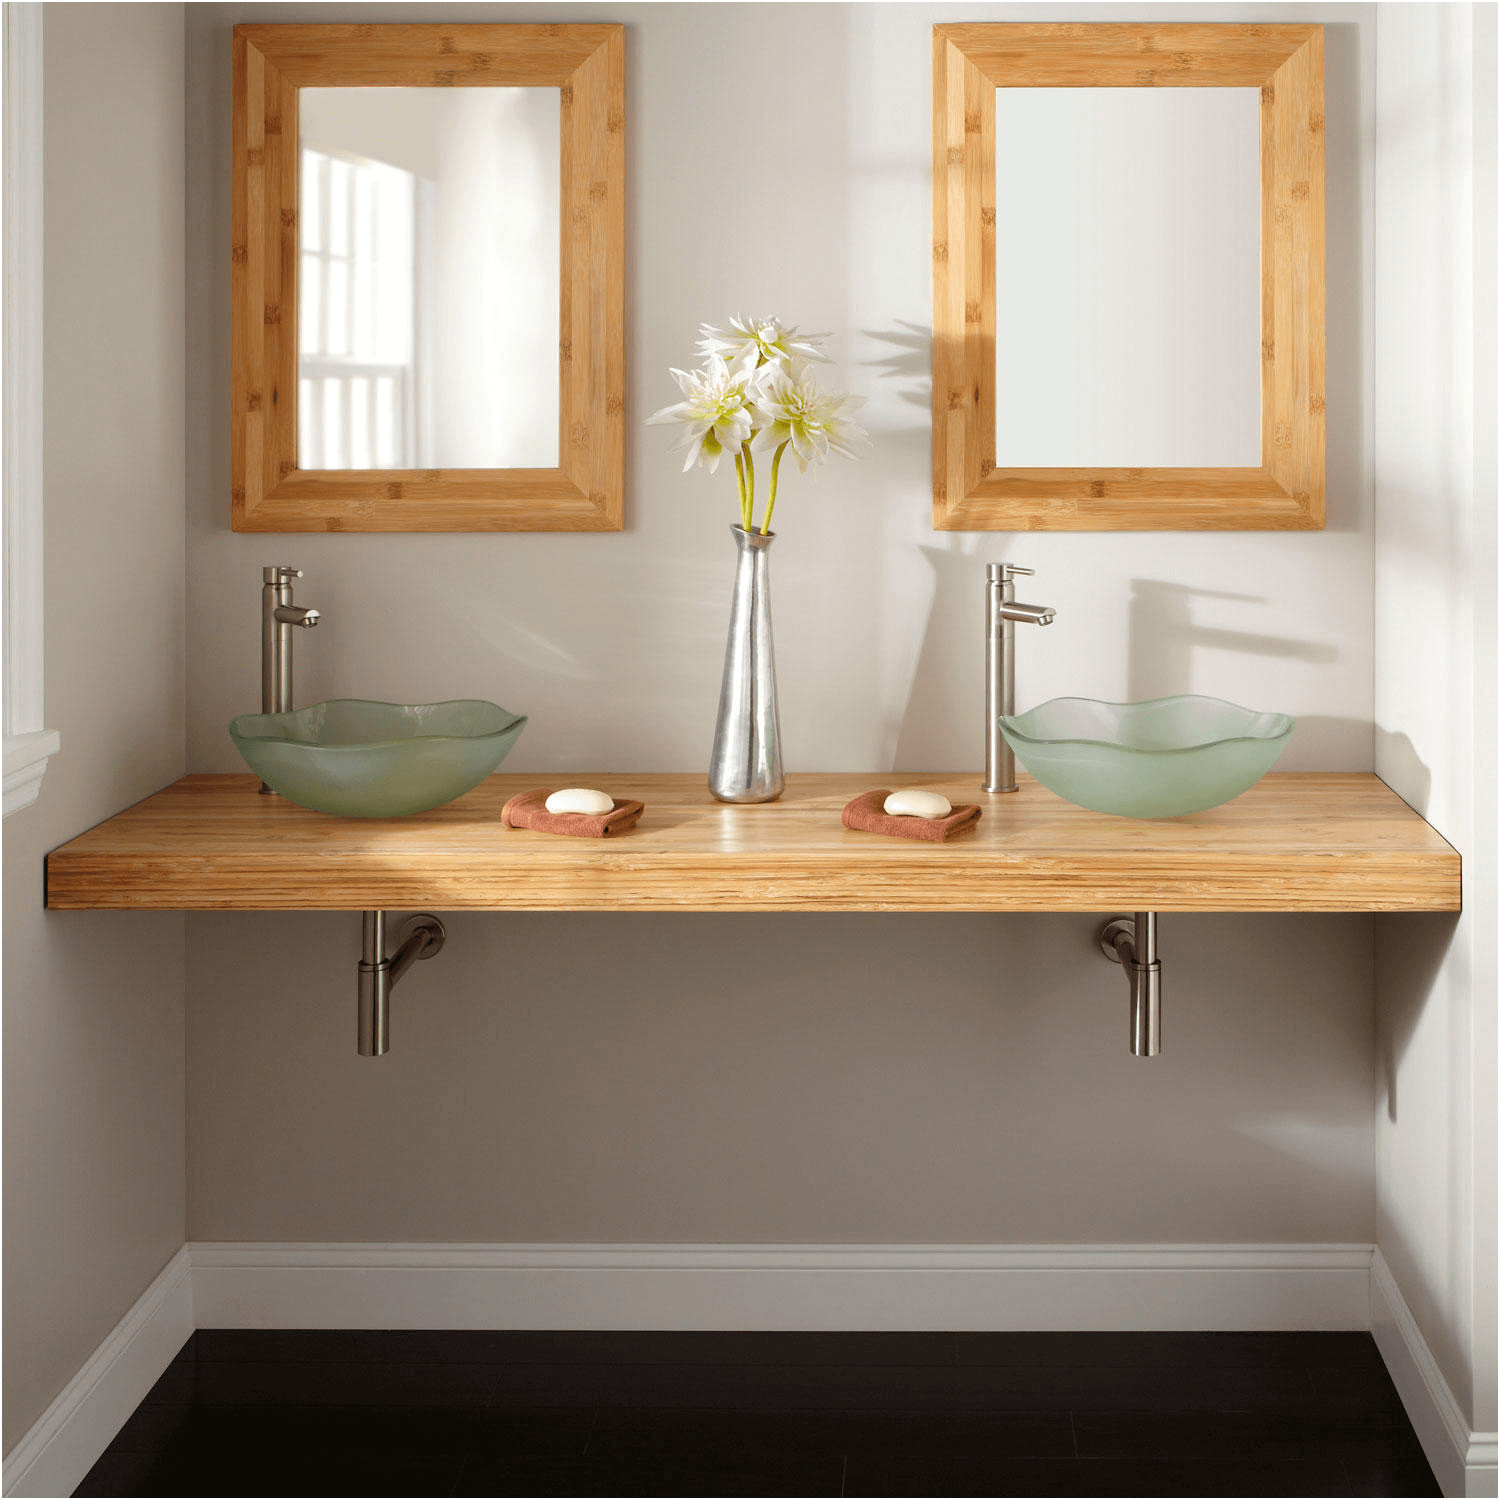 Inspirational Sink Bowls for Bathrooms